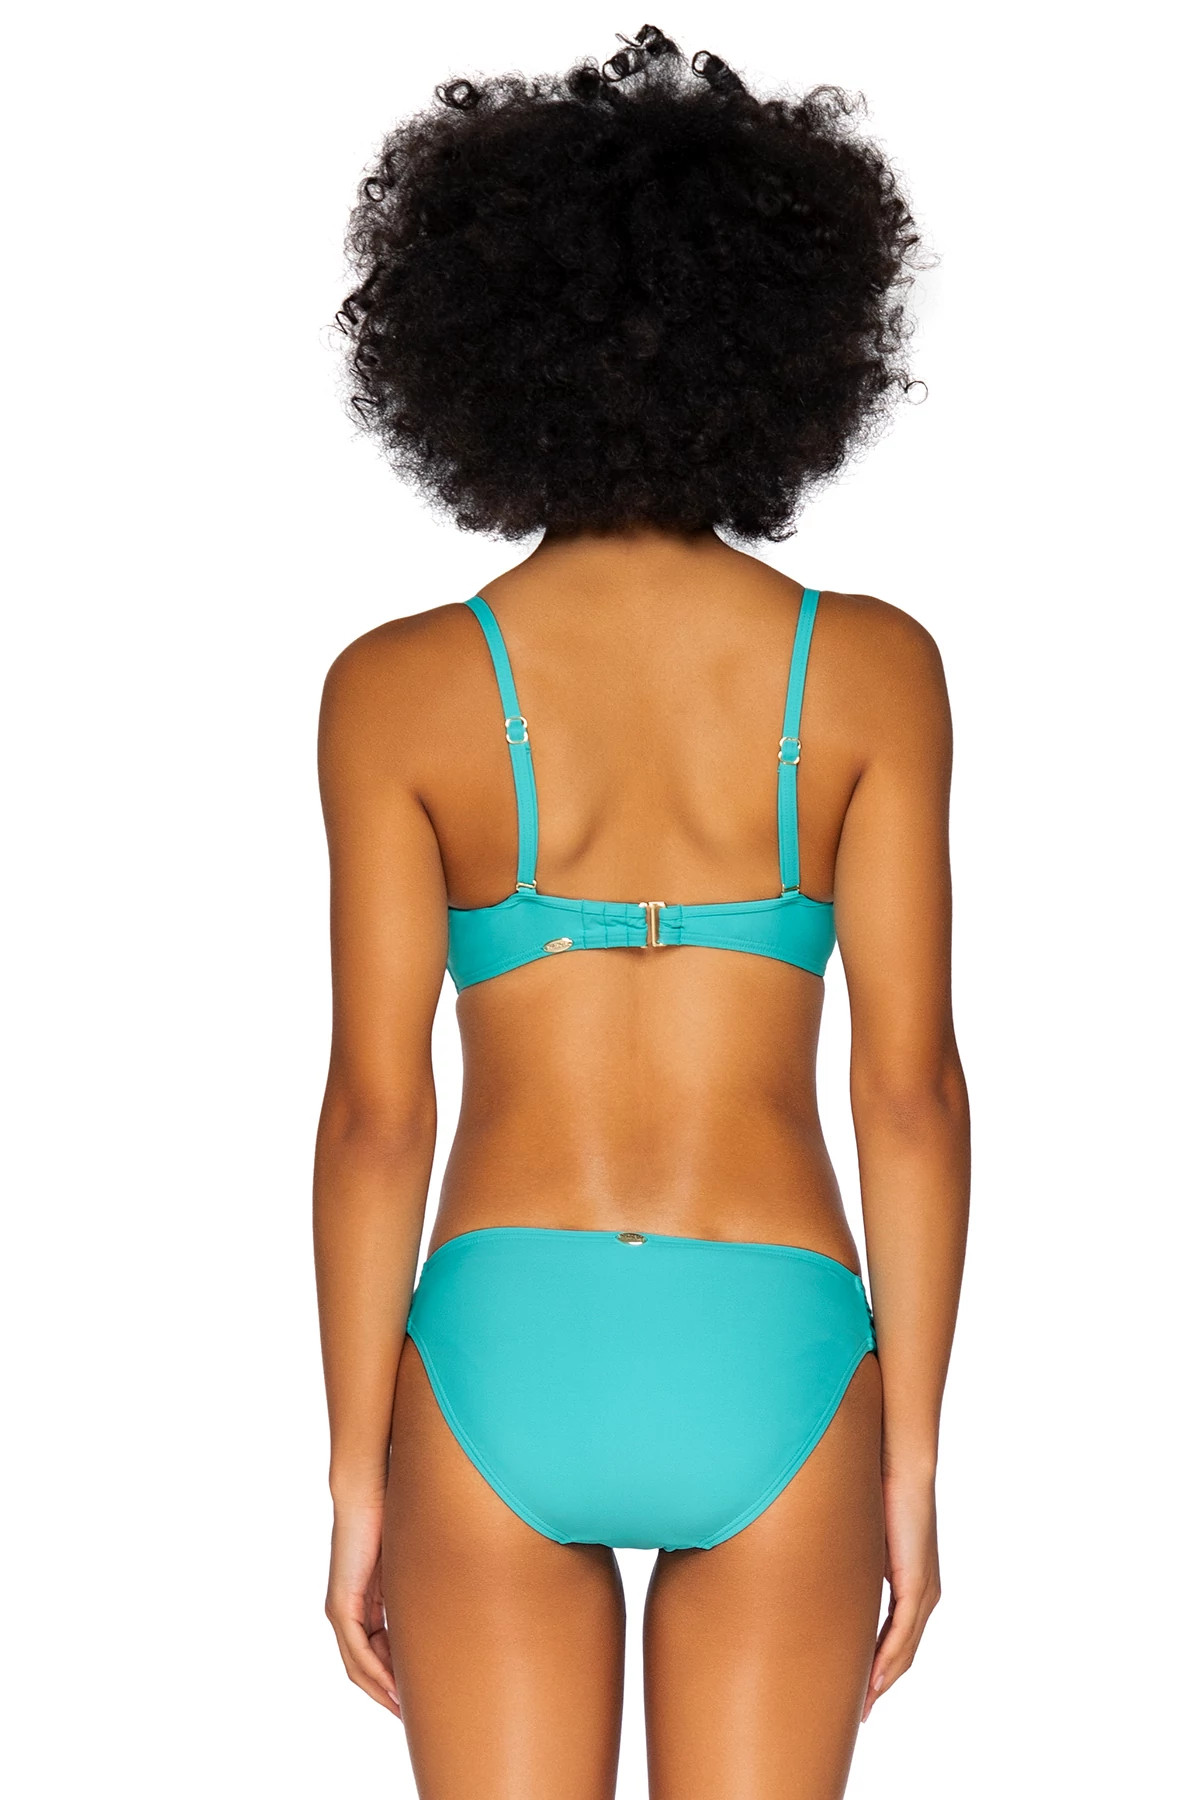 SEASIDE AQUA Iconic Twist Underwire Bandeau Bikini Top (D+ Cup) image number 2